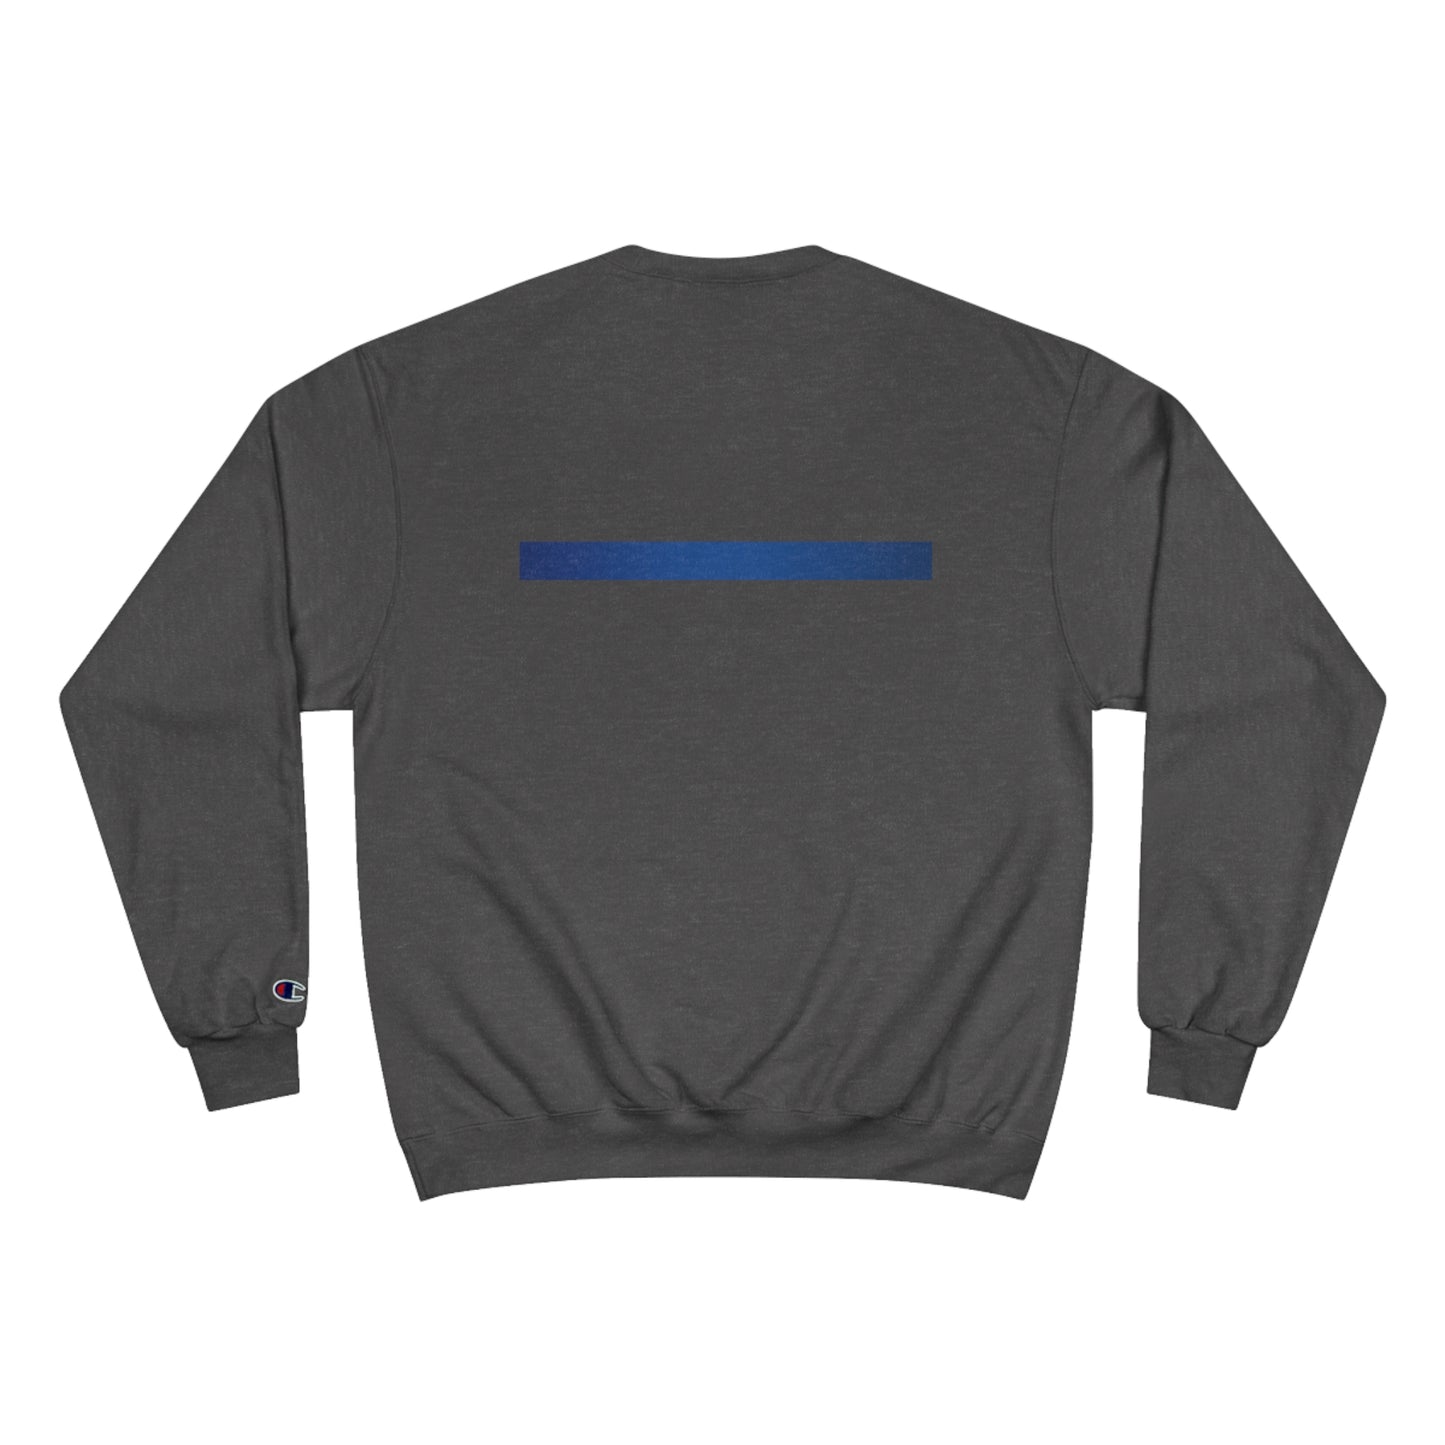 Boston Police (american flag /blue line) EST. 1854 Champion Sweatshirt (white writing)